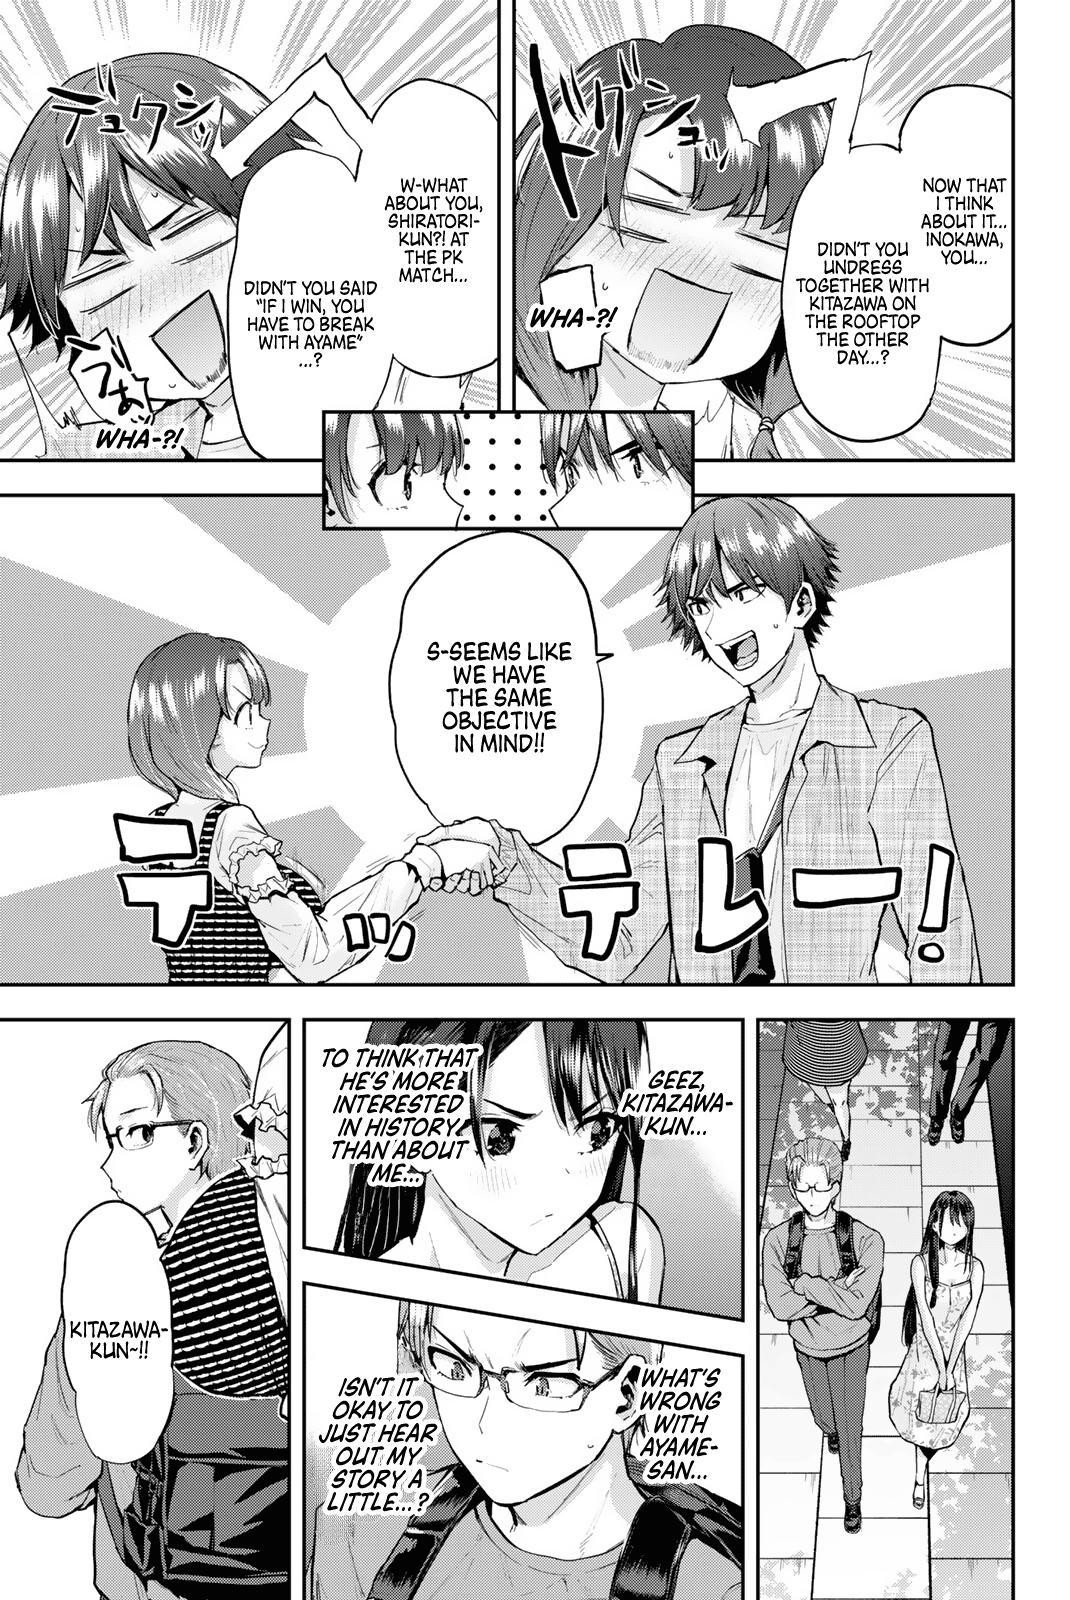 Kitazawa-kun Is in A class - chapter 12 - #3